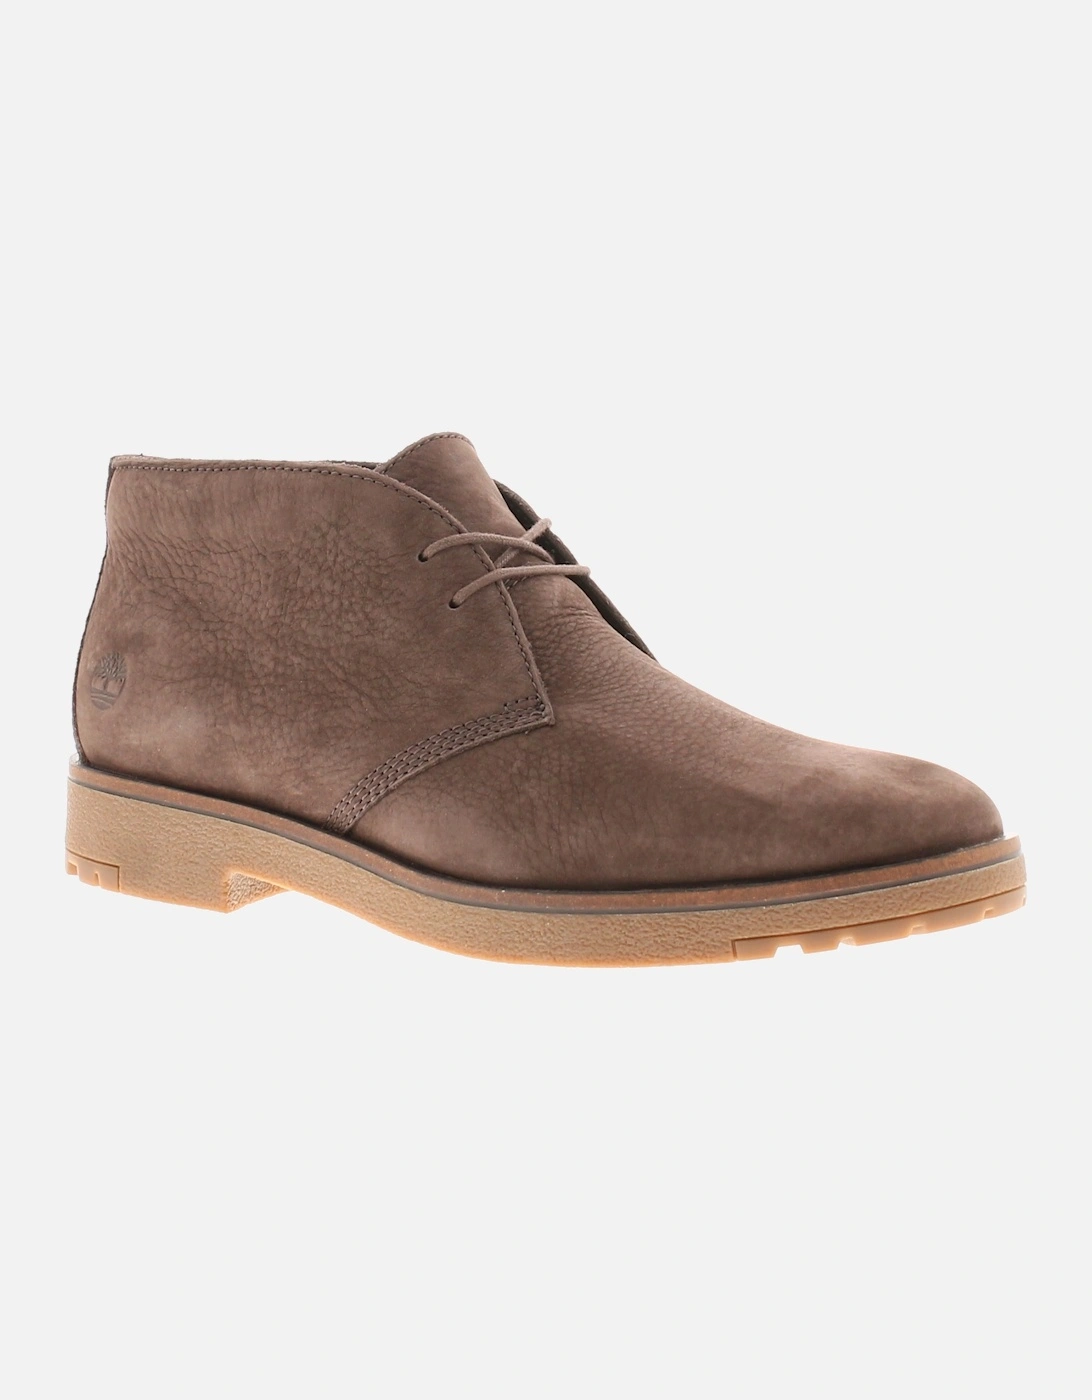 Mens Desert Boots Folk Gentleman Chukk Leather Lace Up brown UK Size, 6 of 5